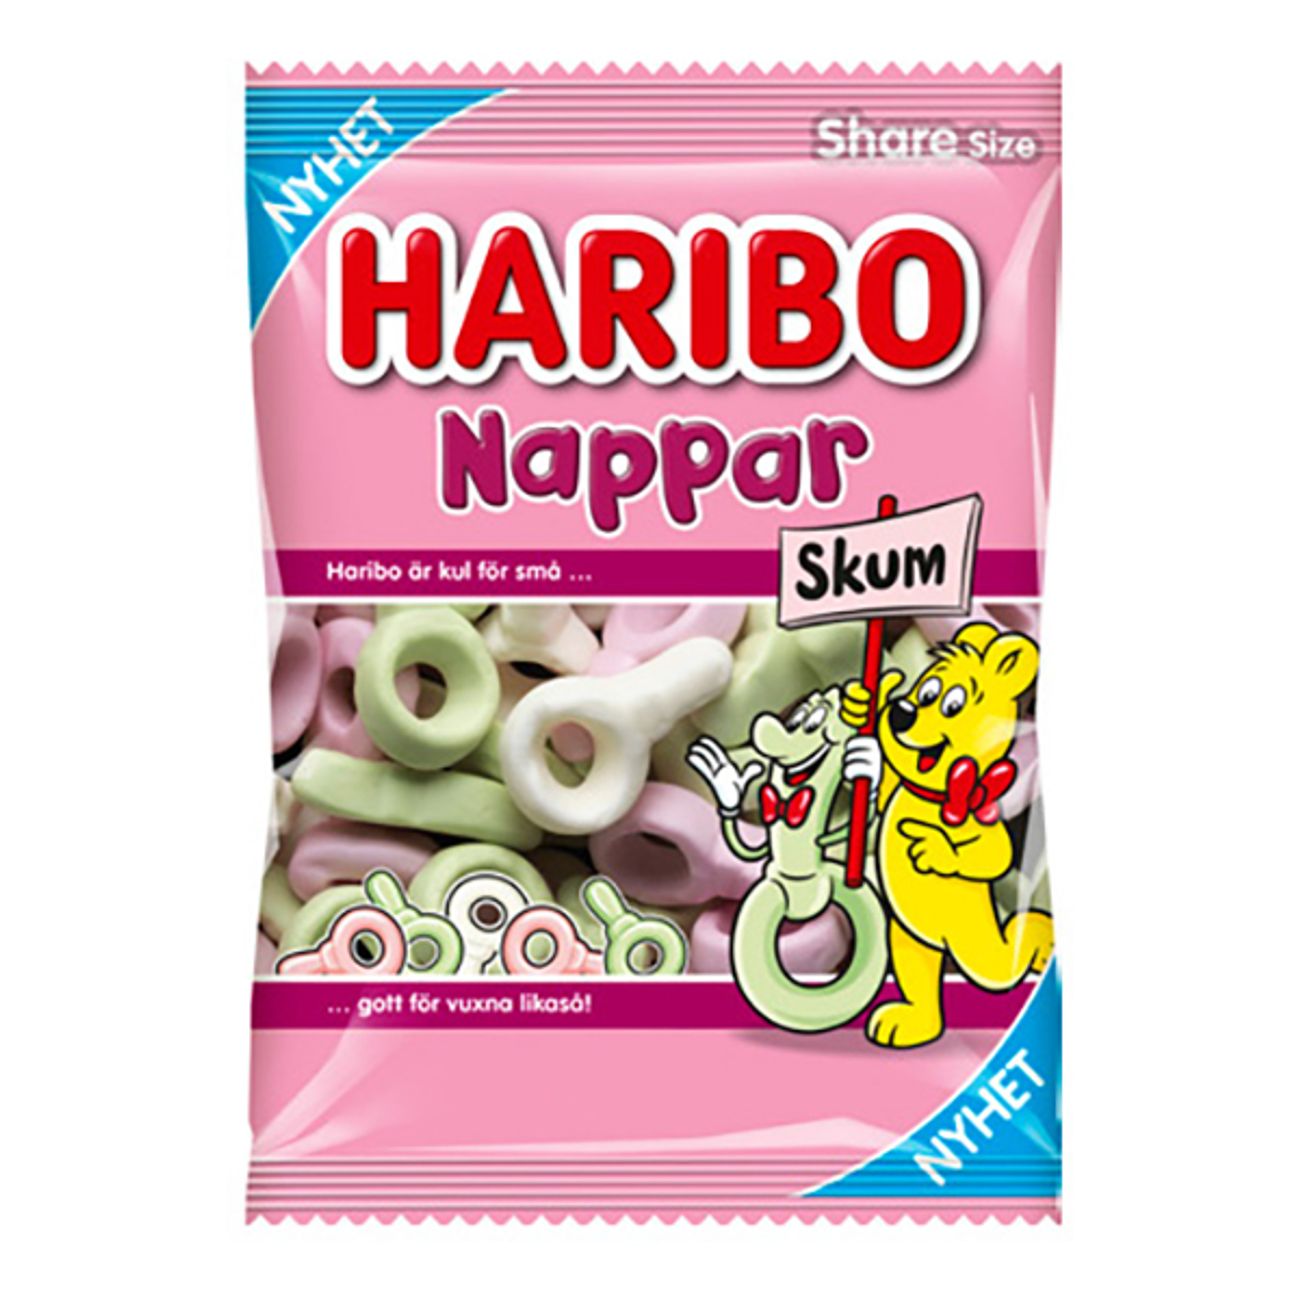 haribo-nappar-skum-73922-1